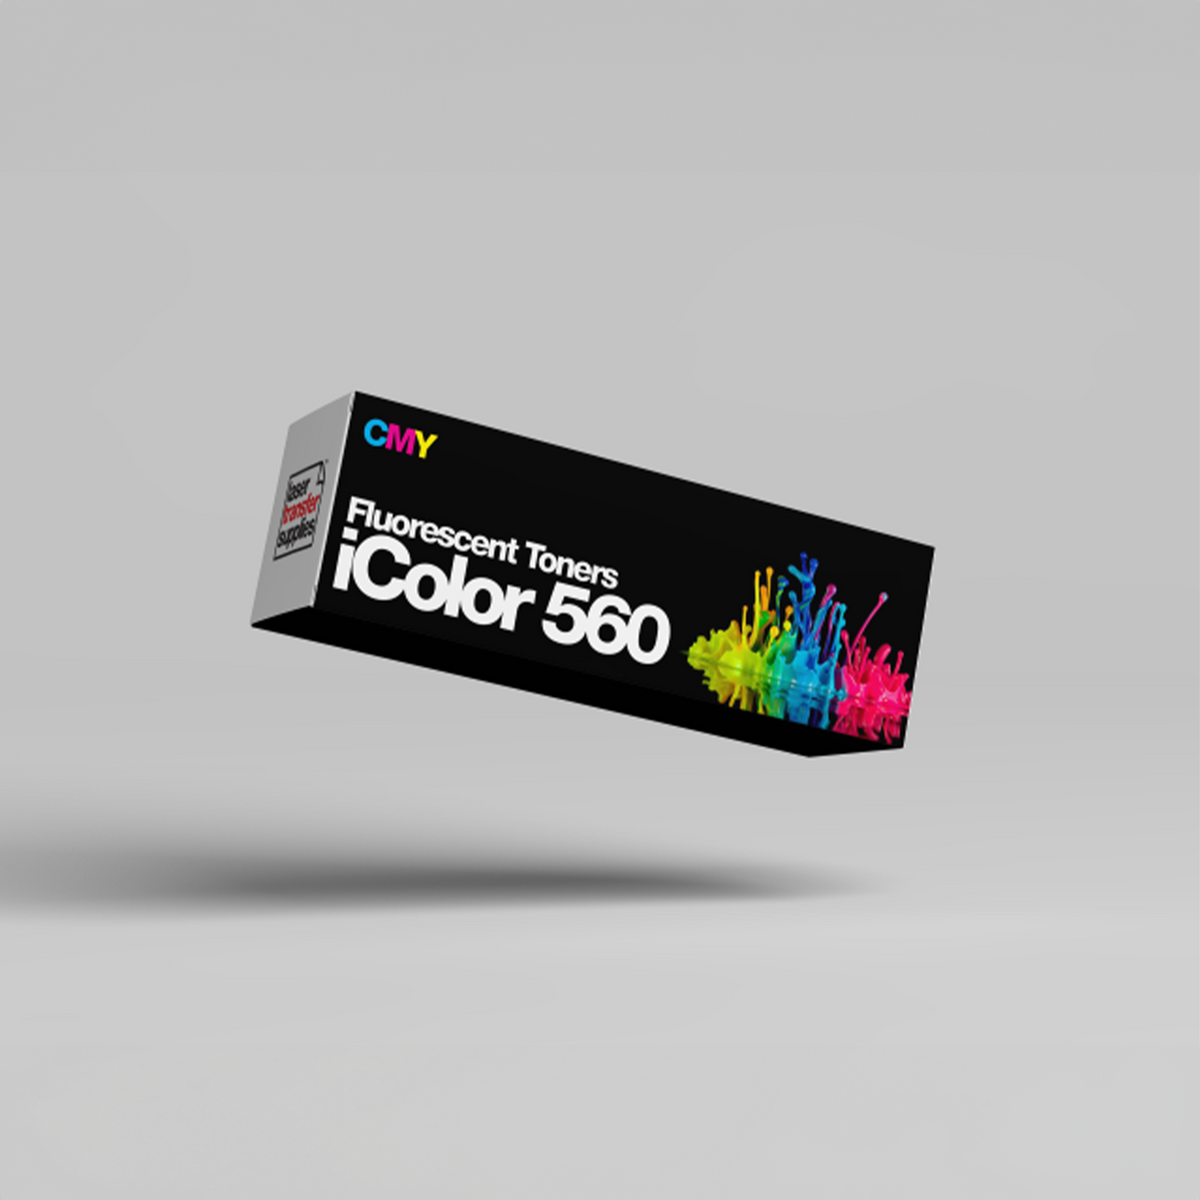 IColor 560 Fluorescent Toner